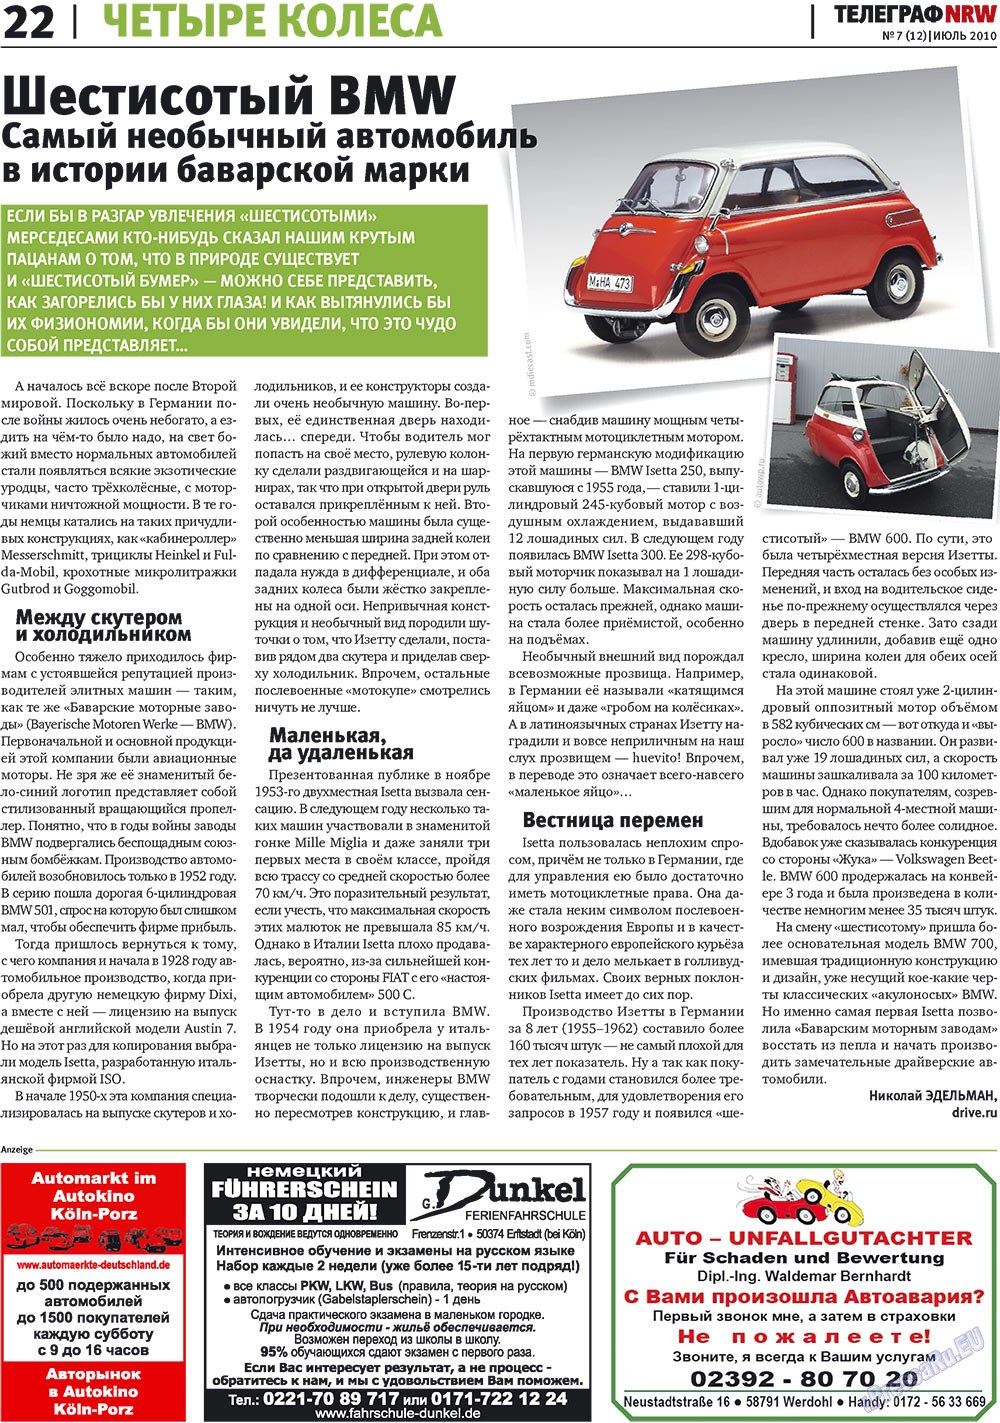 Телеграф NRW, газета. 2010 №7 стр.22